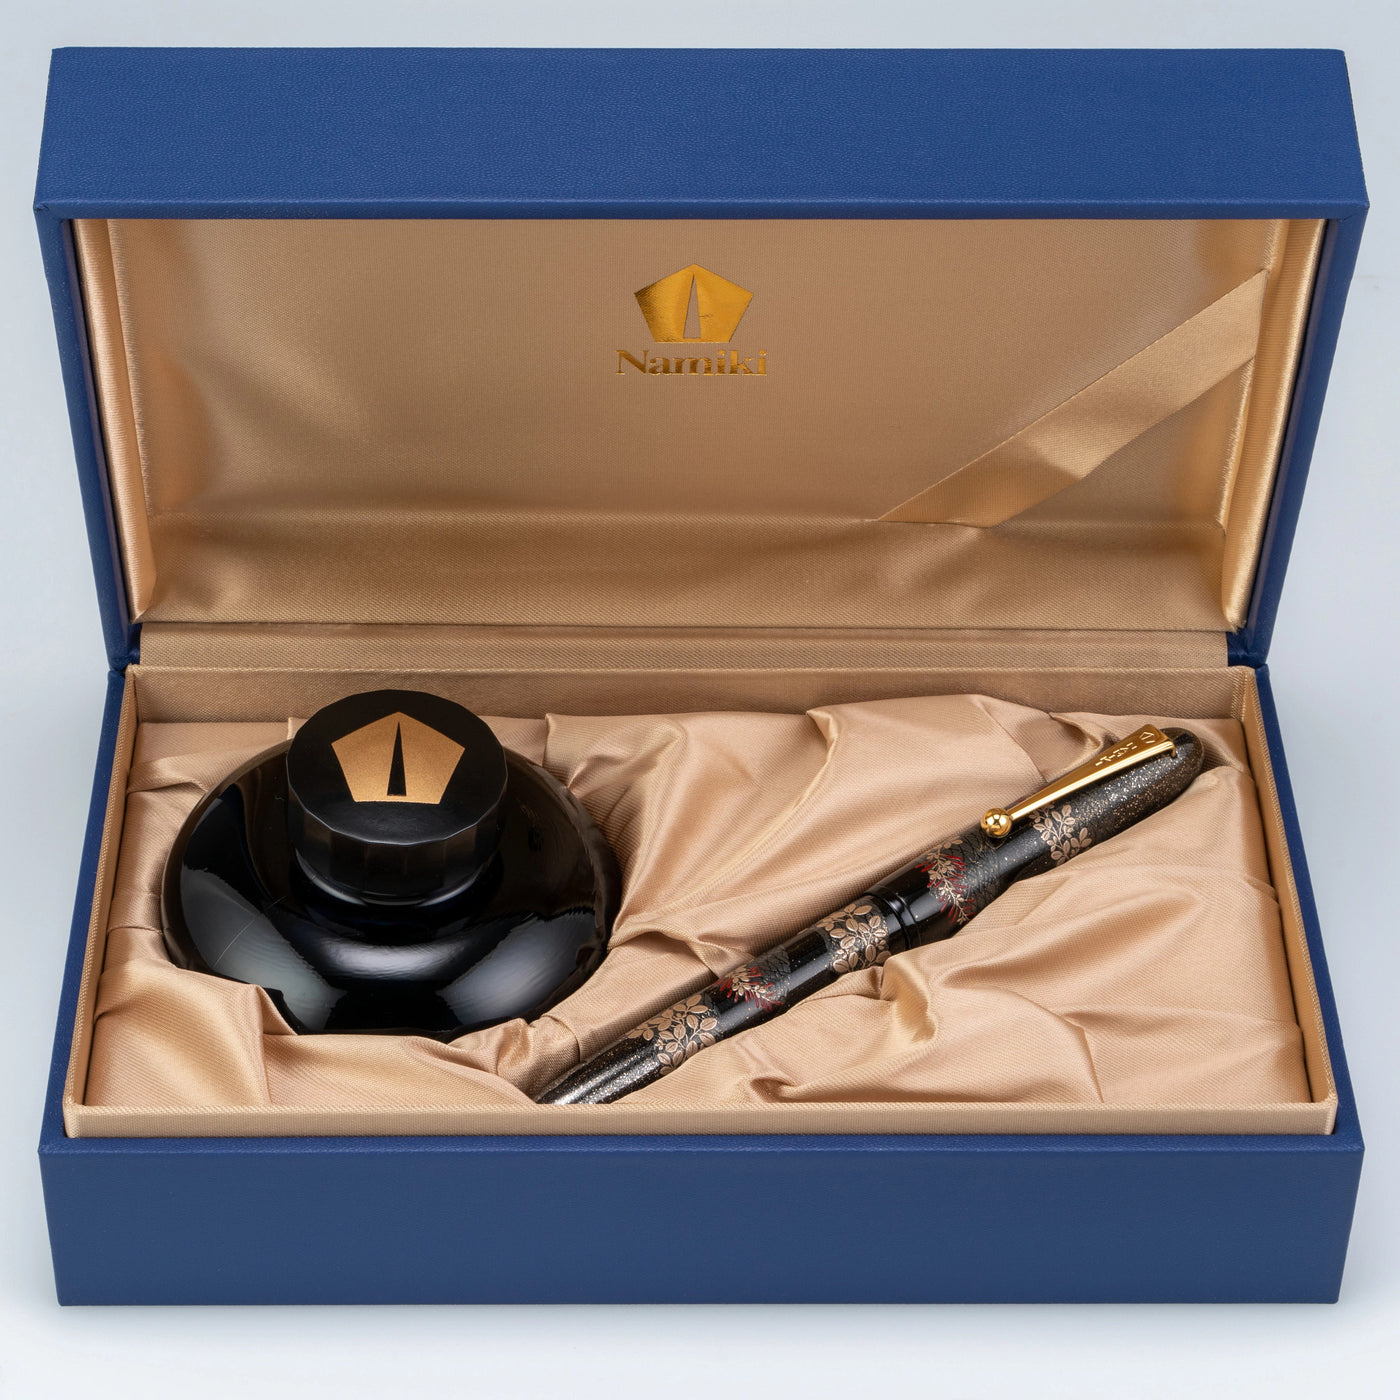 Namiki Yukari Bush Clover Limited Edition Fountain Pen Inside Packaging